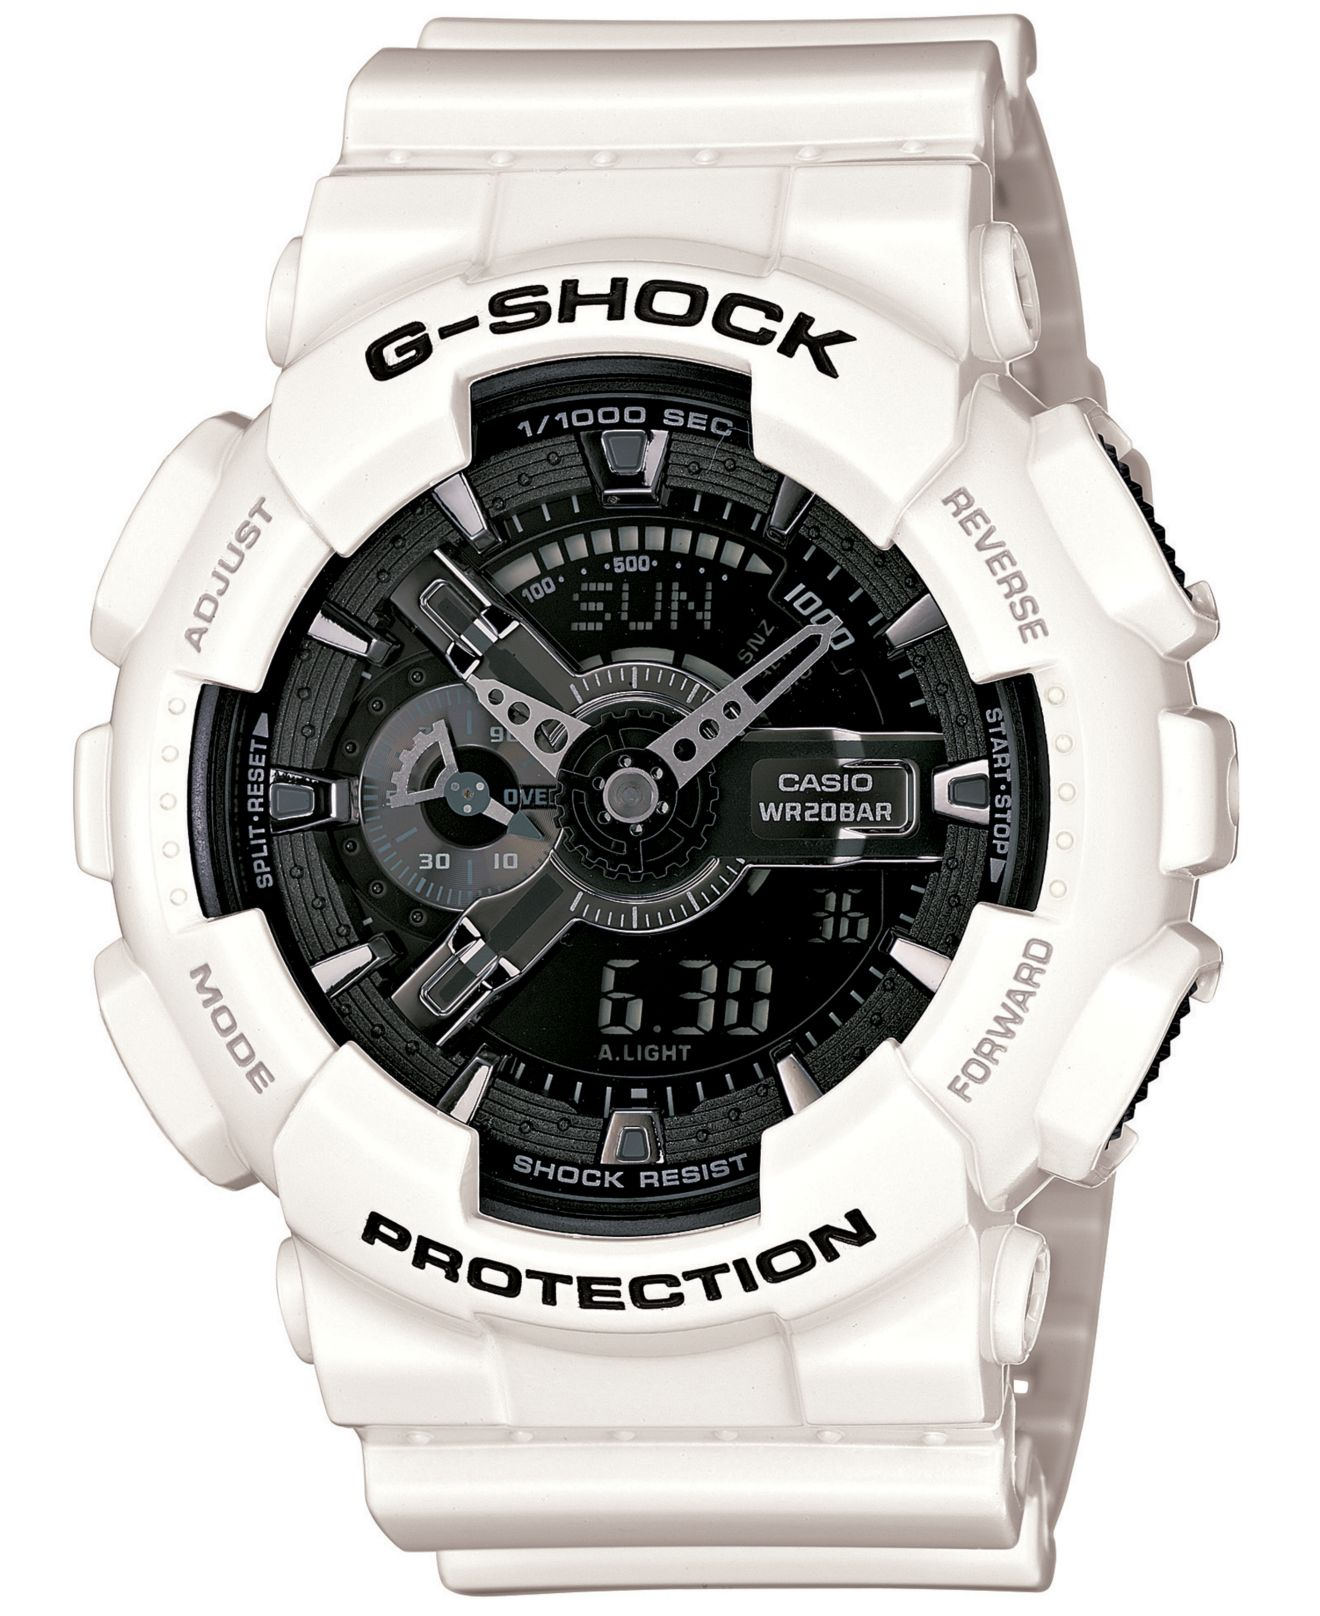 Lyst - G-Shock Men's Analog-digital White Resin Strap Watch 51x55mm Ga110gw-7a in ...1320 x 1616